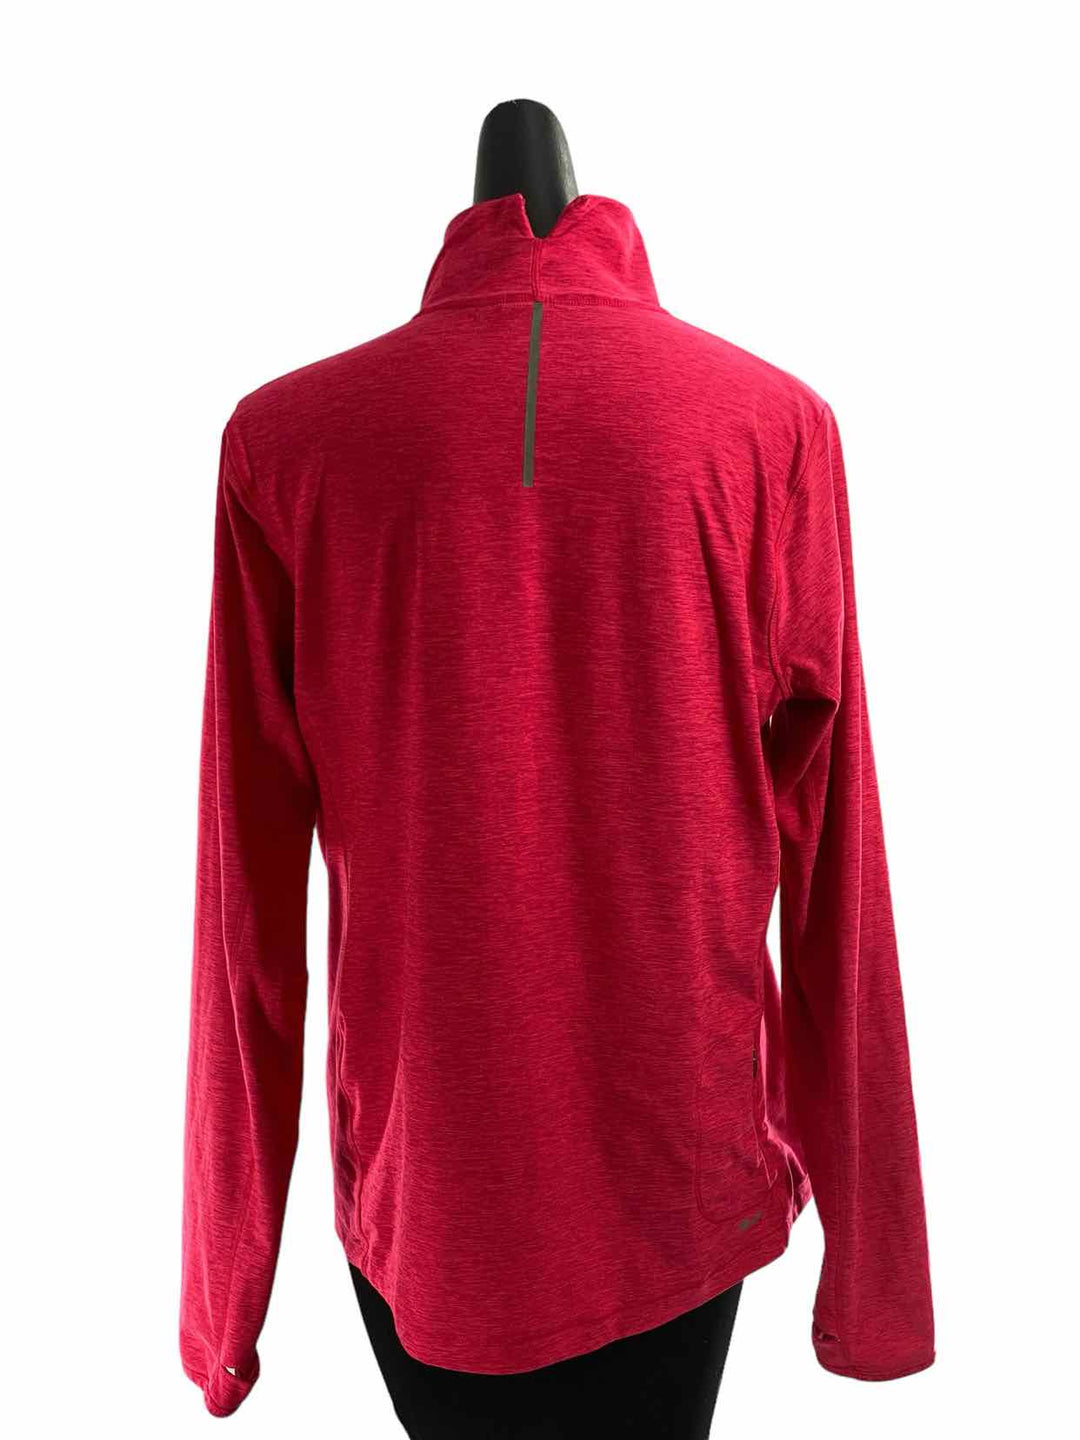 New Balance Size XL Pink Athletic Jacket